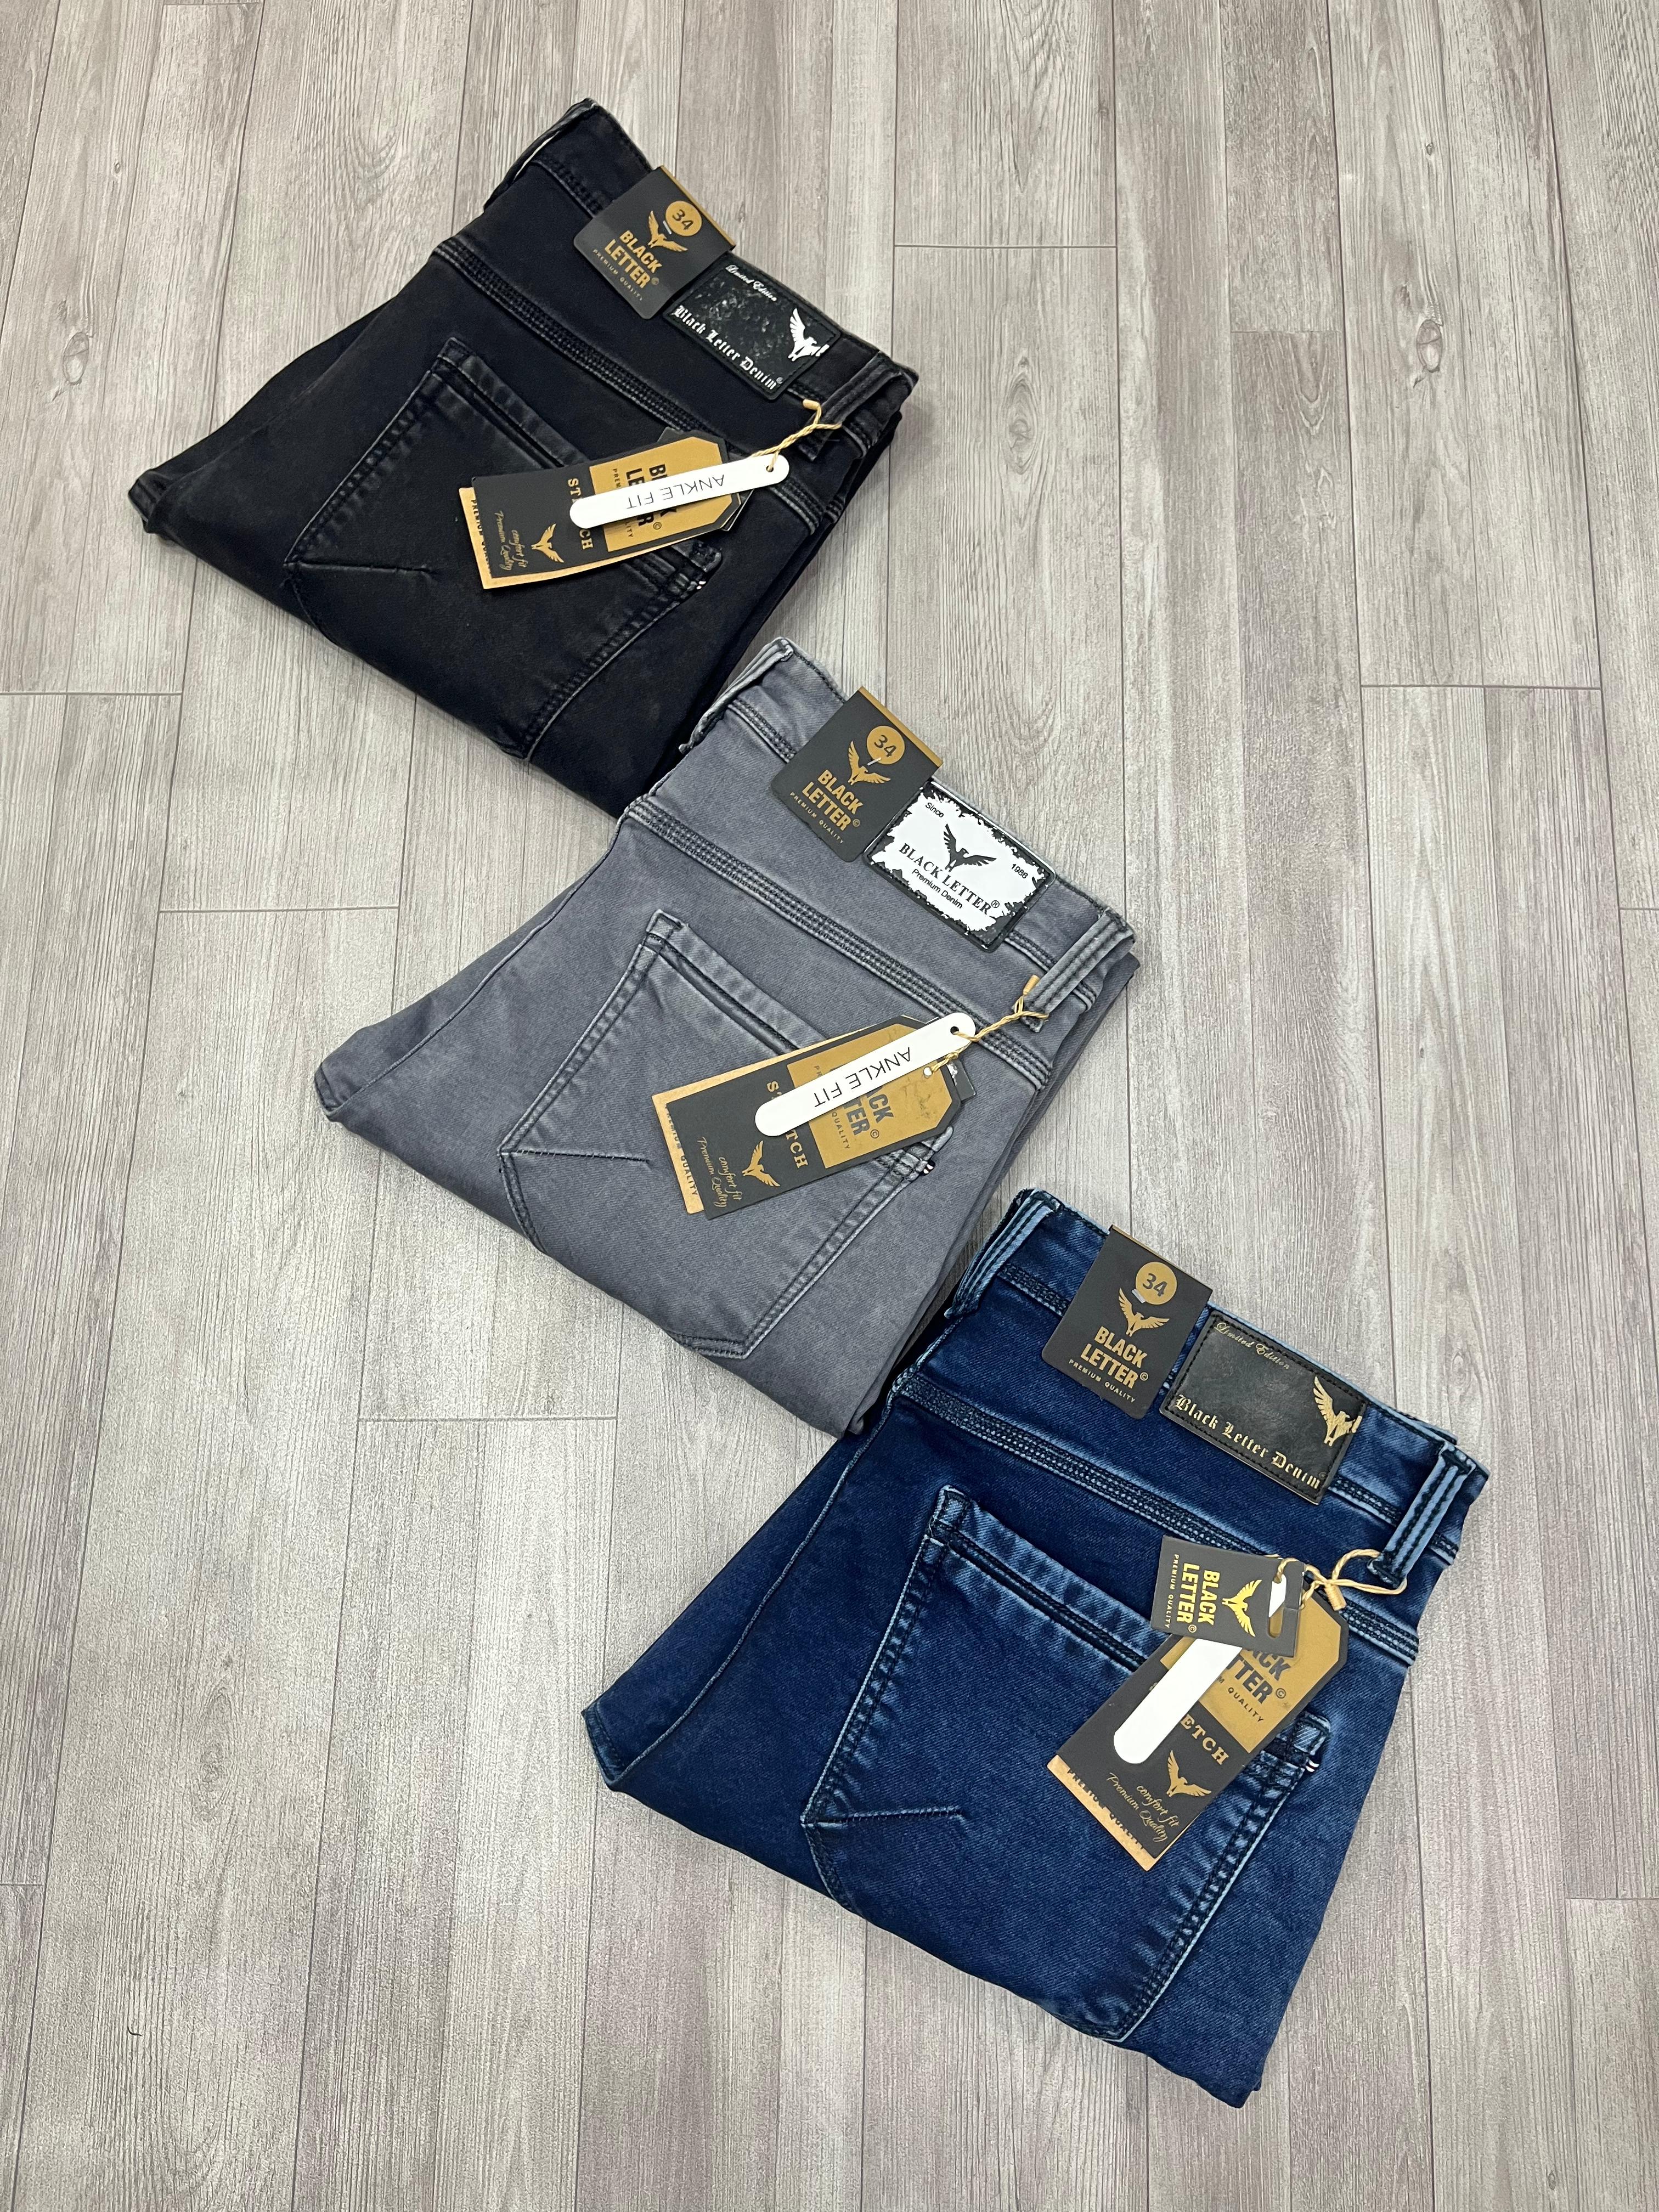 Black Letter Ankle Fit Cross Pocket with Extra front Pocket Jeans